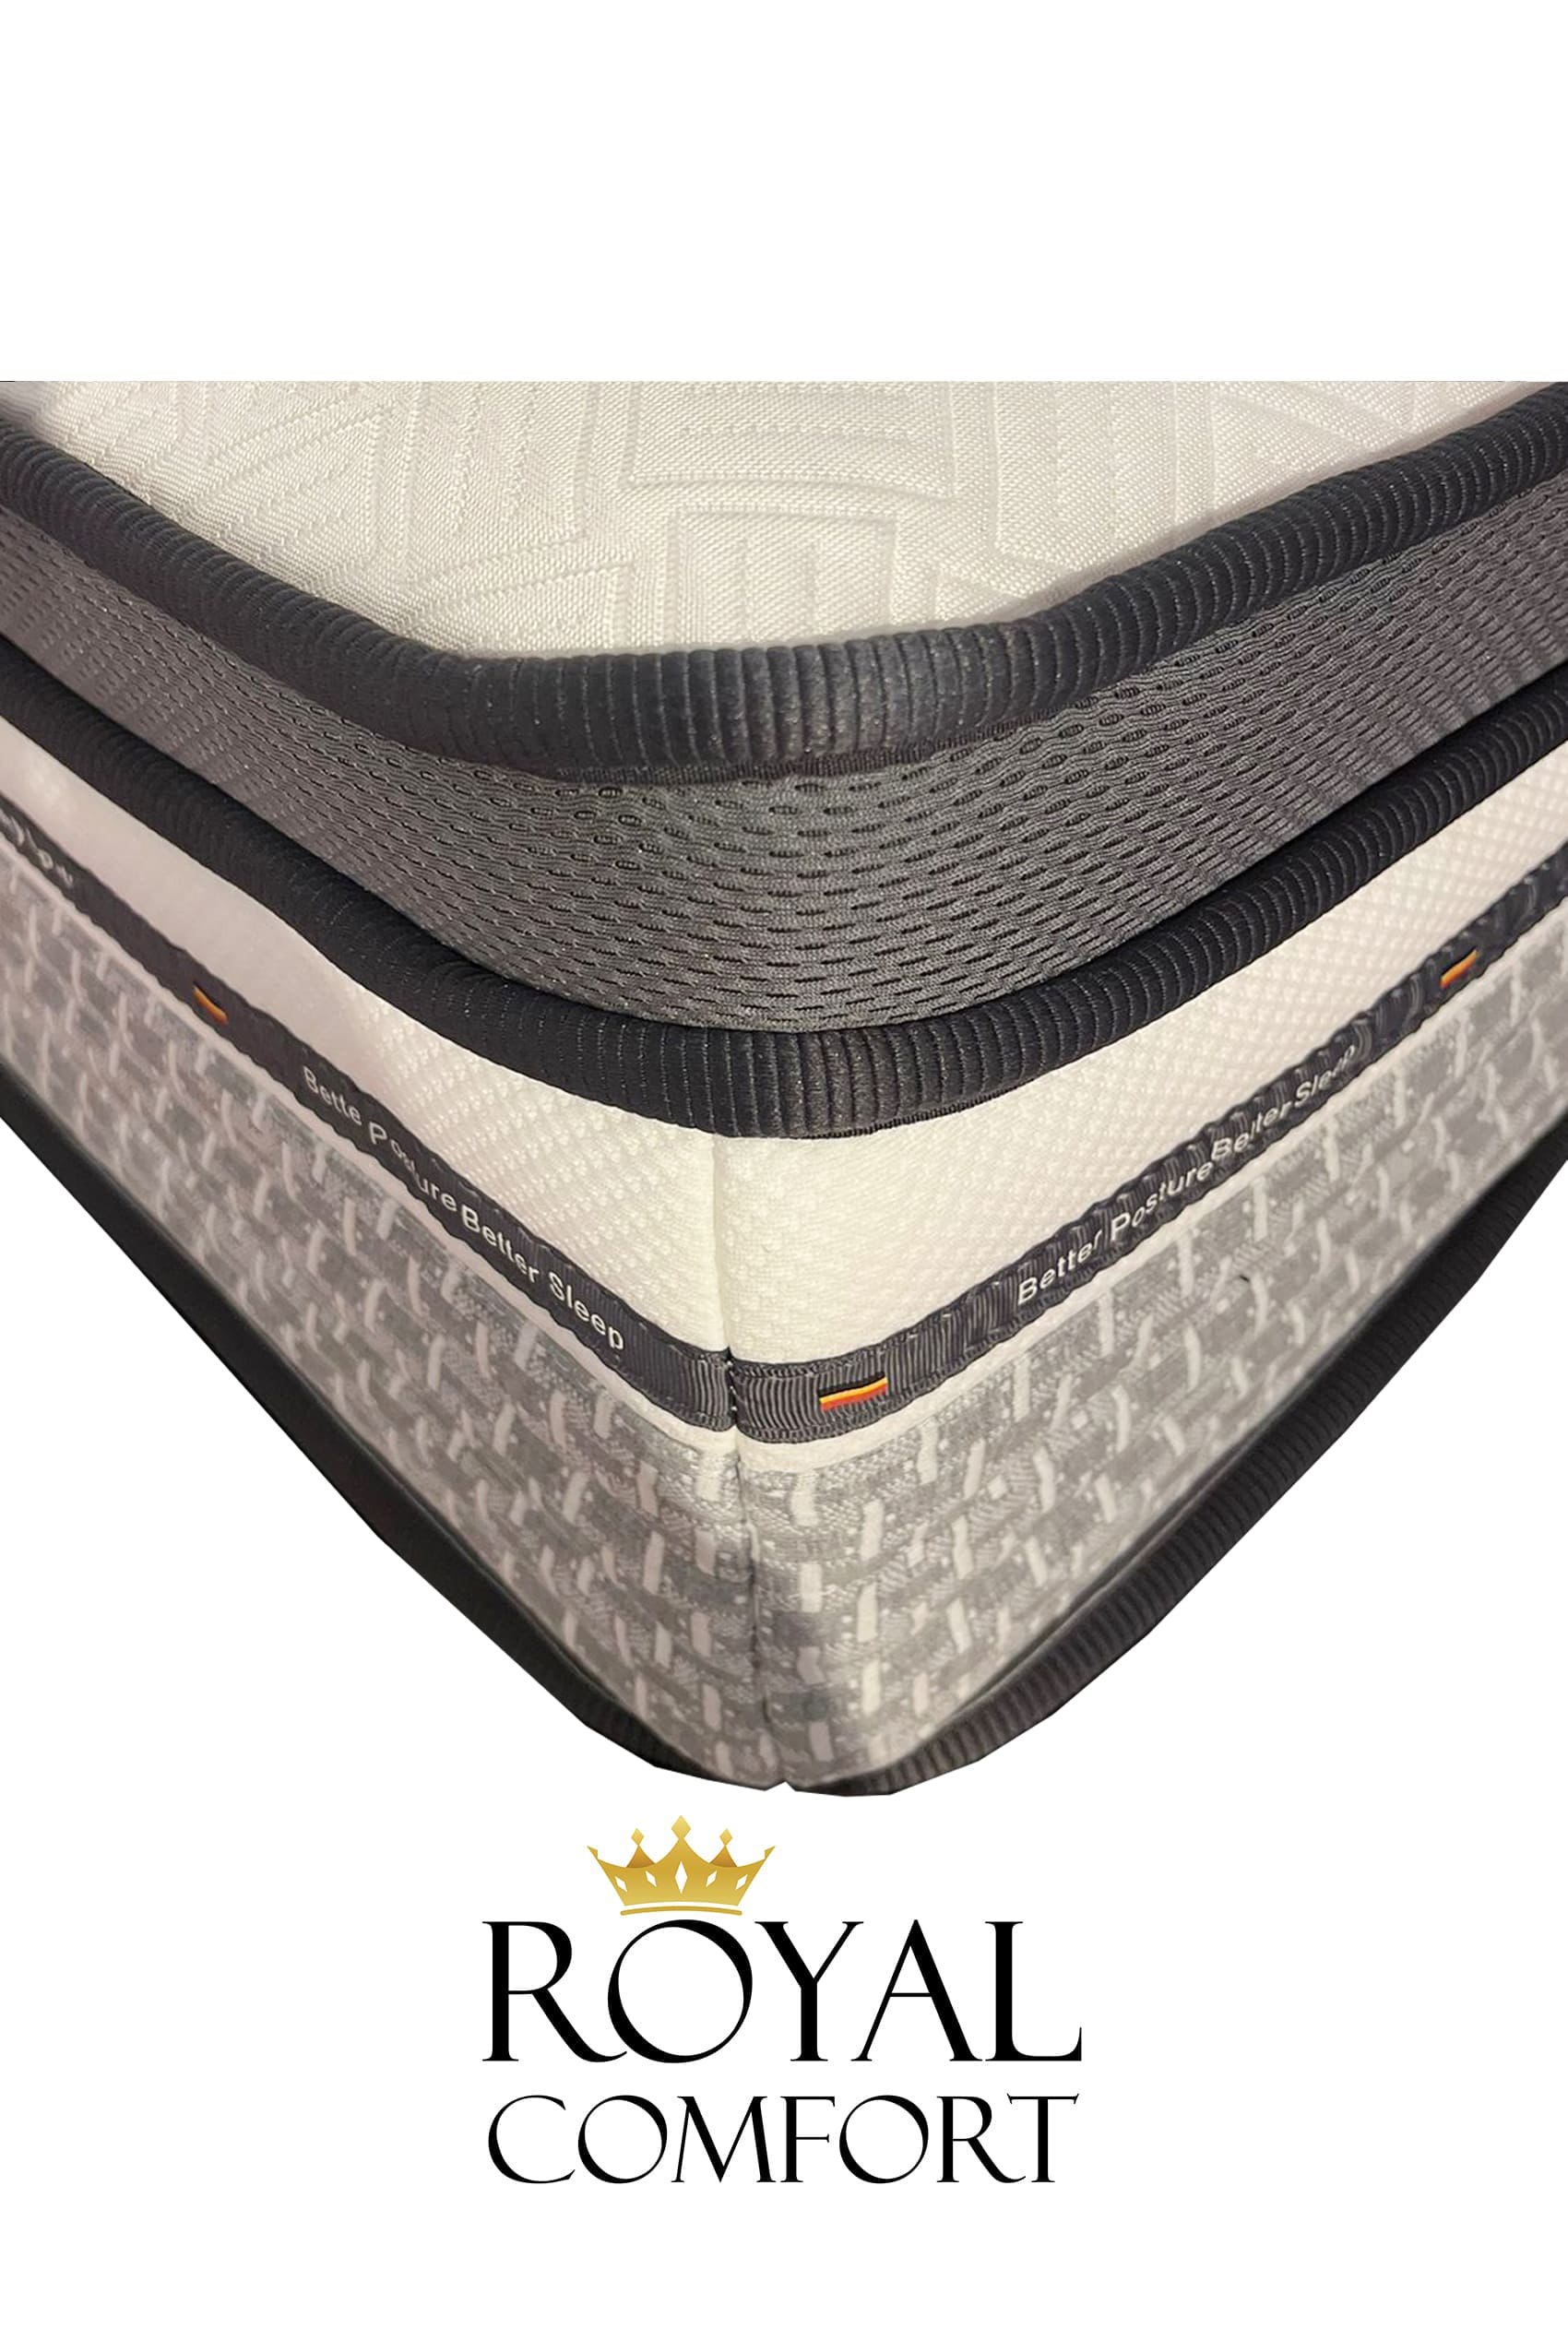 Royal Comfort 888 Mattress